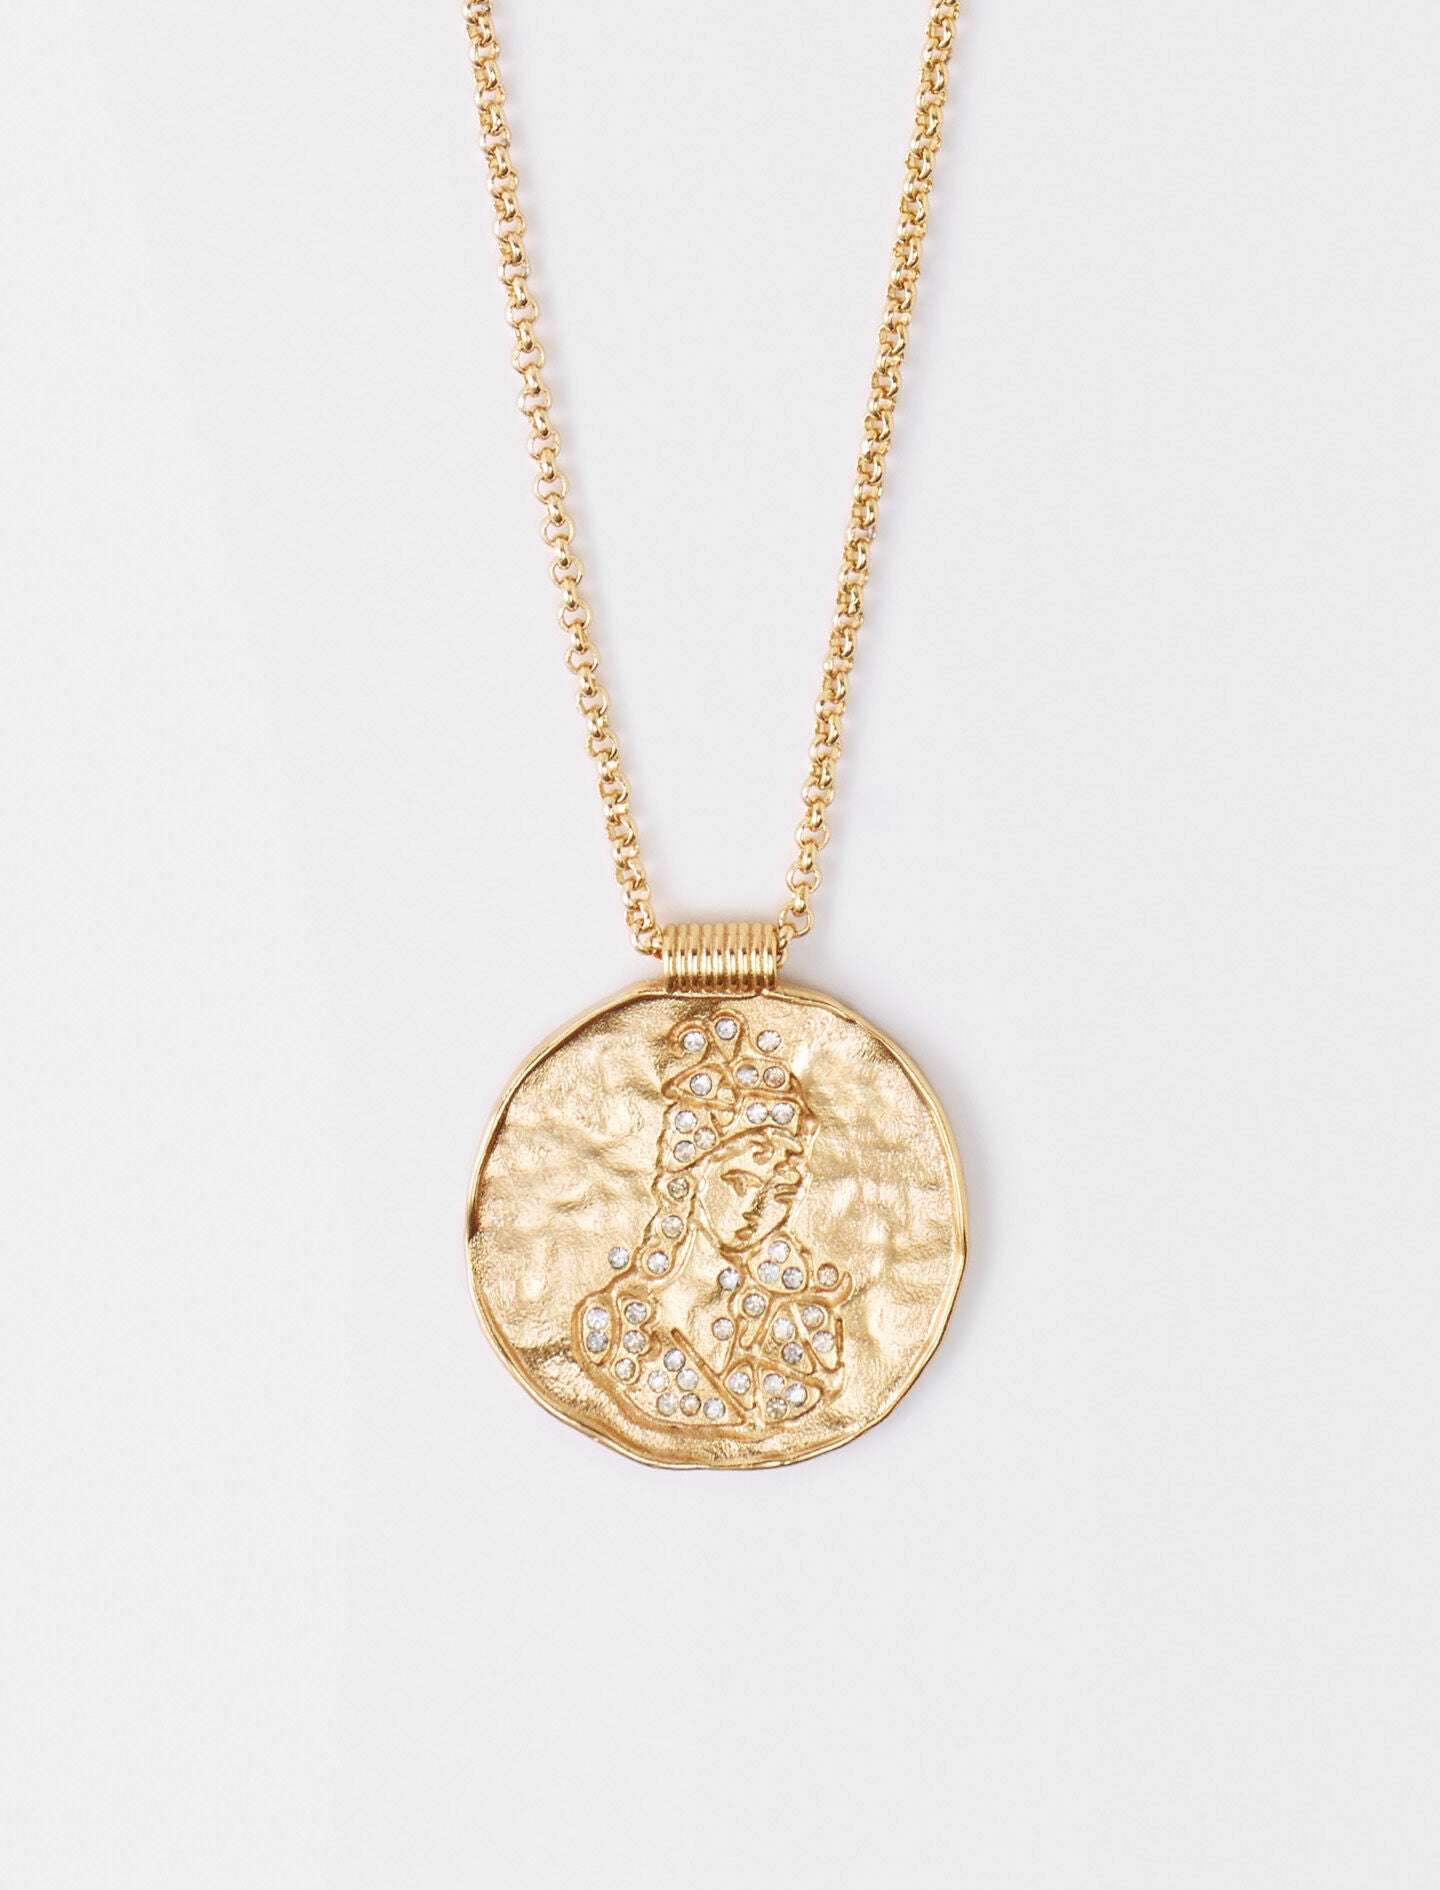 Virgo-featured-virgo zodiac medal